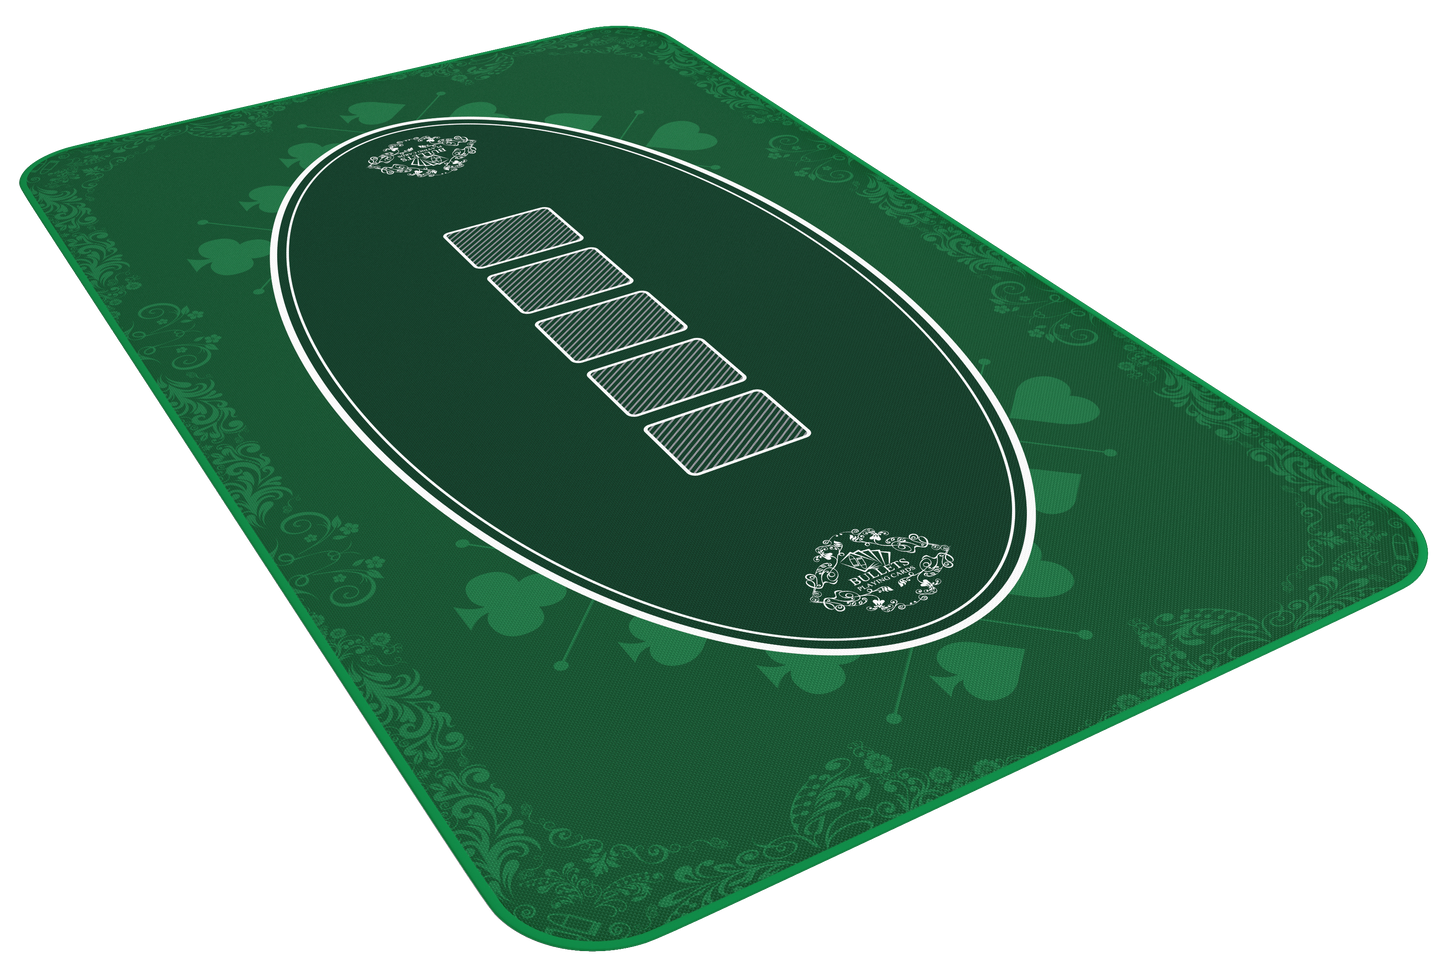 Pokermatte 100x60 cm, eckig - Casino-Design